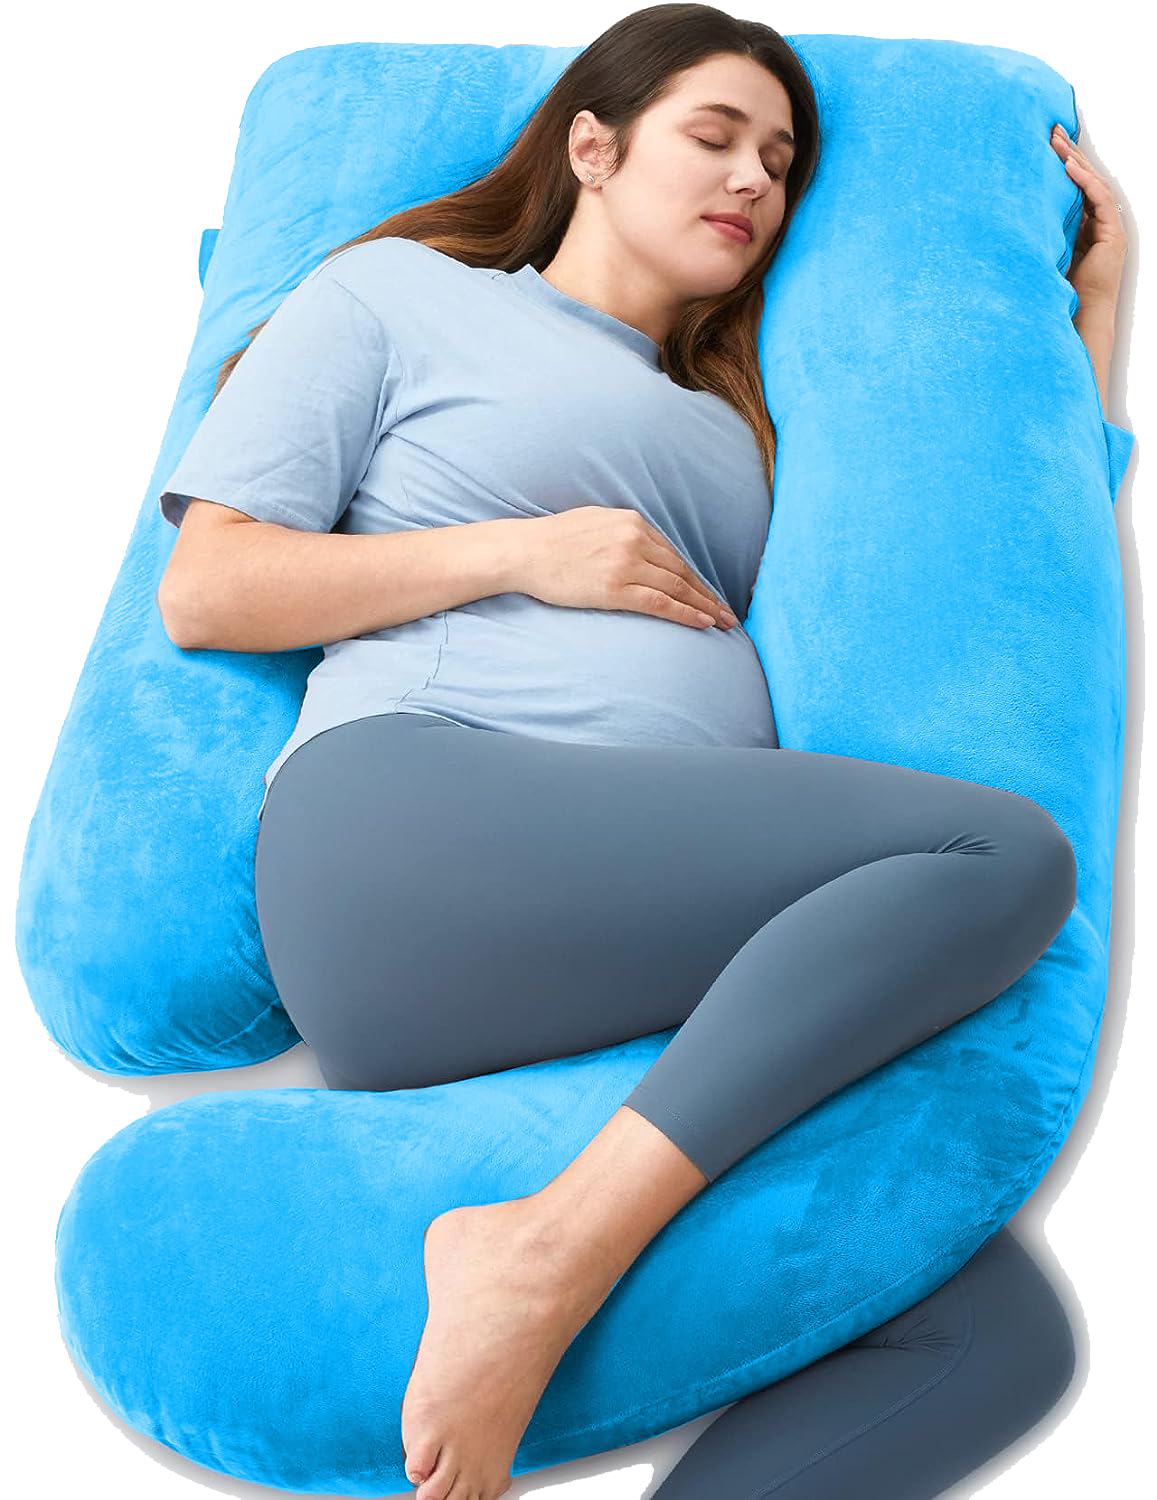 TruComfort J-Shaped Pregnancy Maternity Pillow With Velvet Cover -54 I –